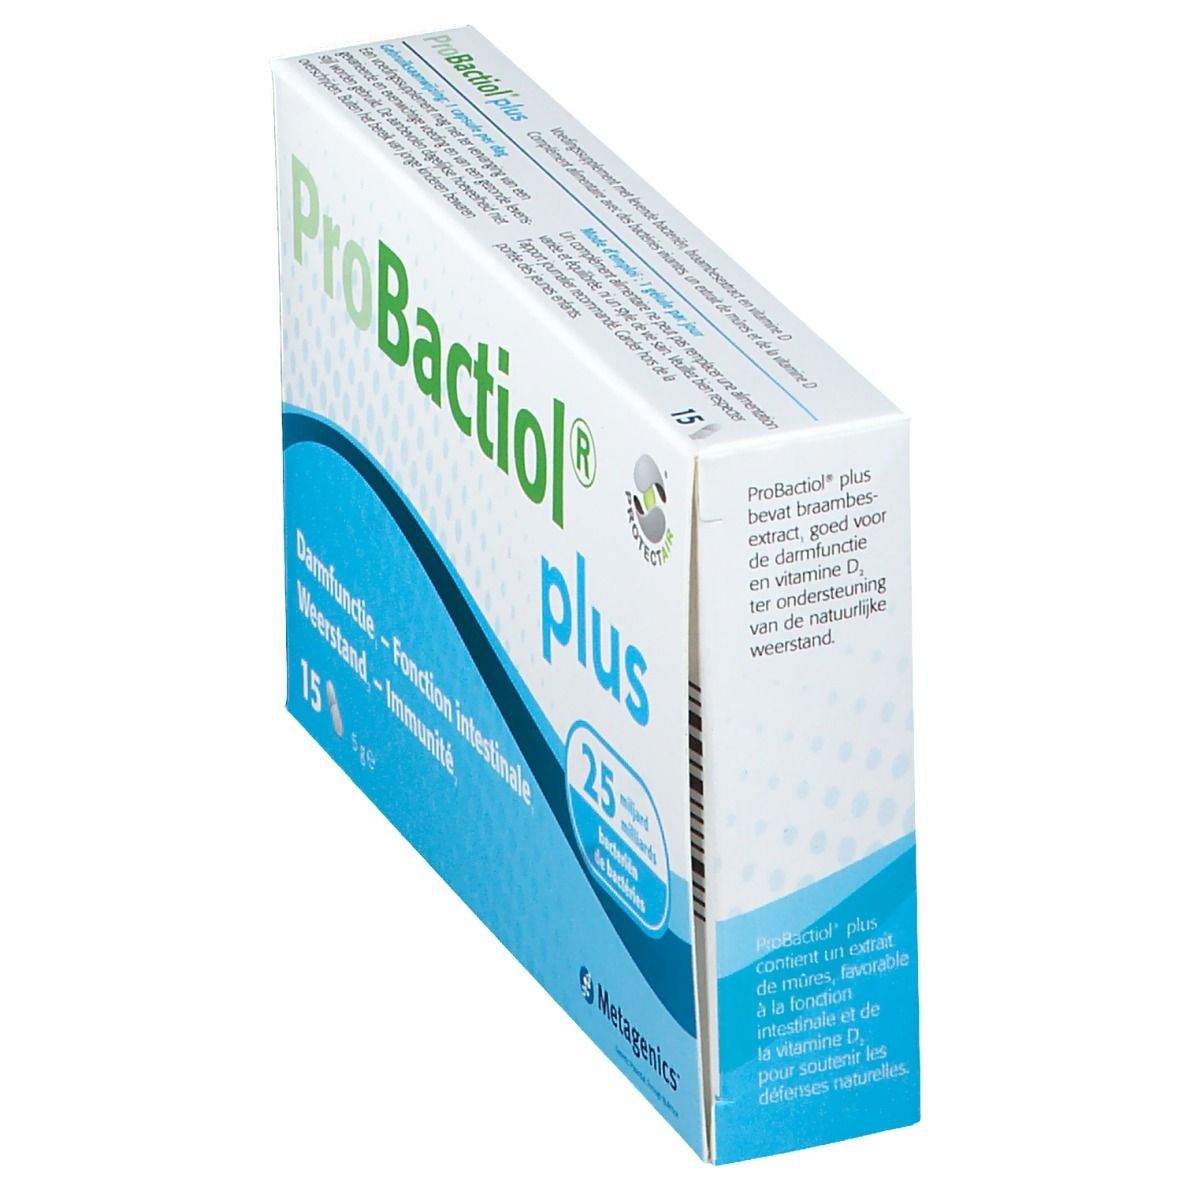 Metagenics®  Probactiol® Plus Protectair